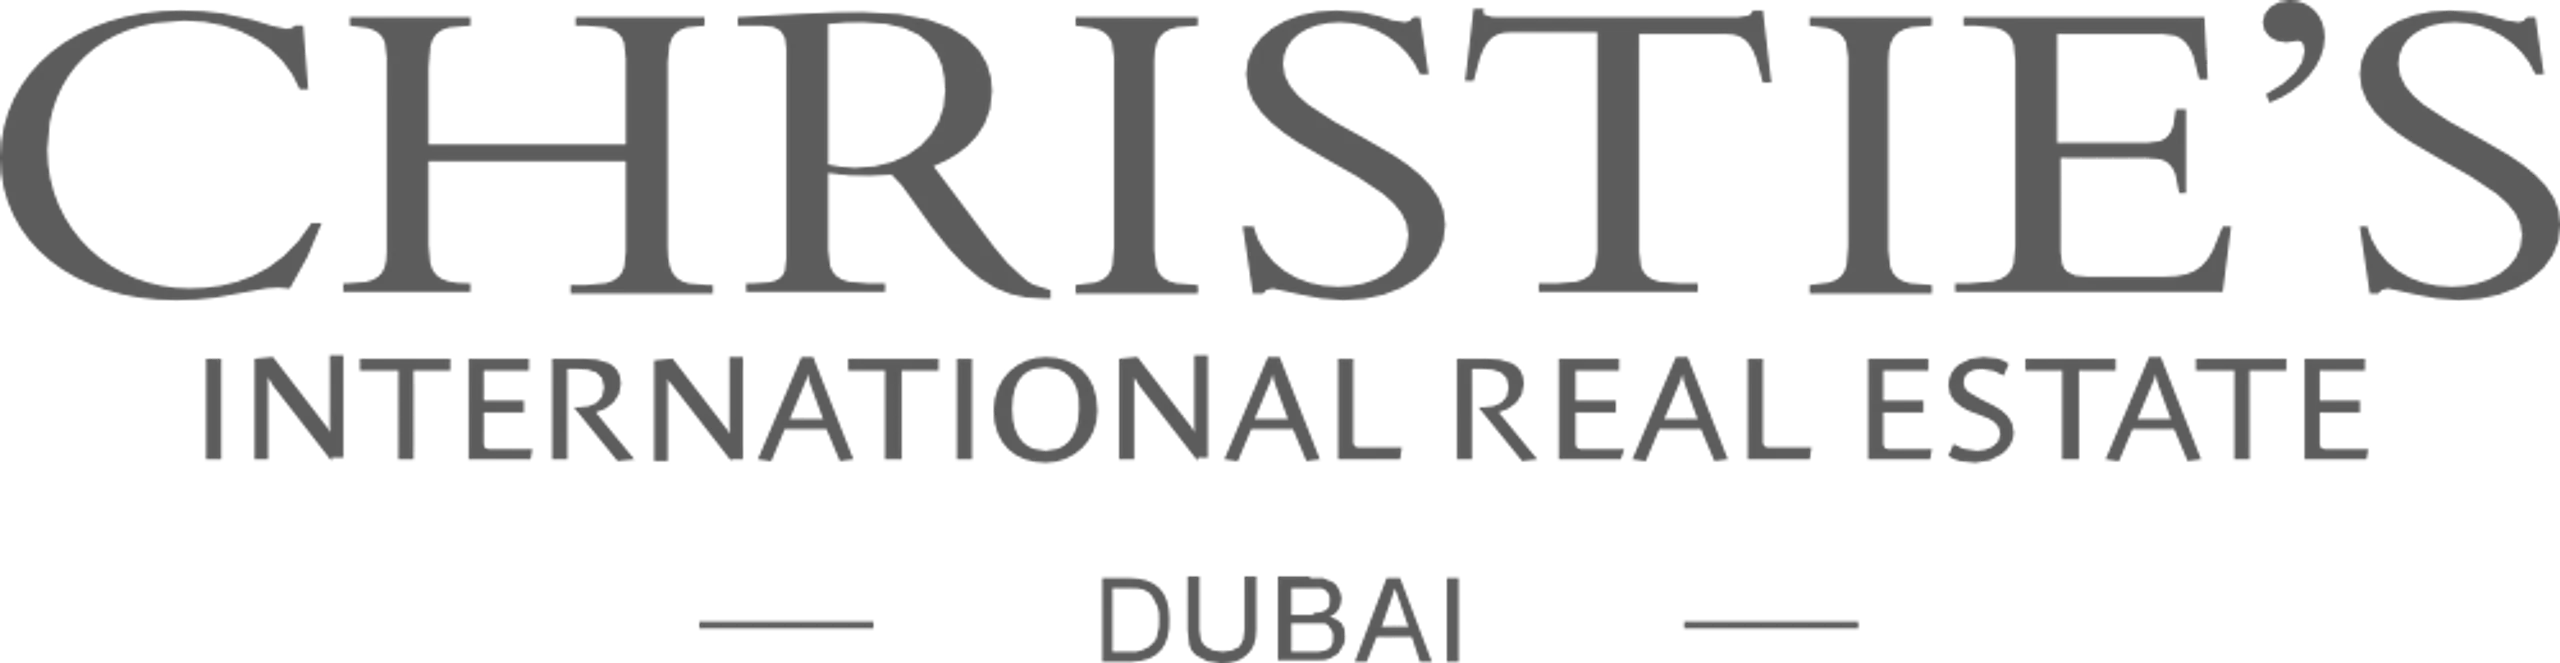 Christie's Real Estate Dubai